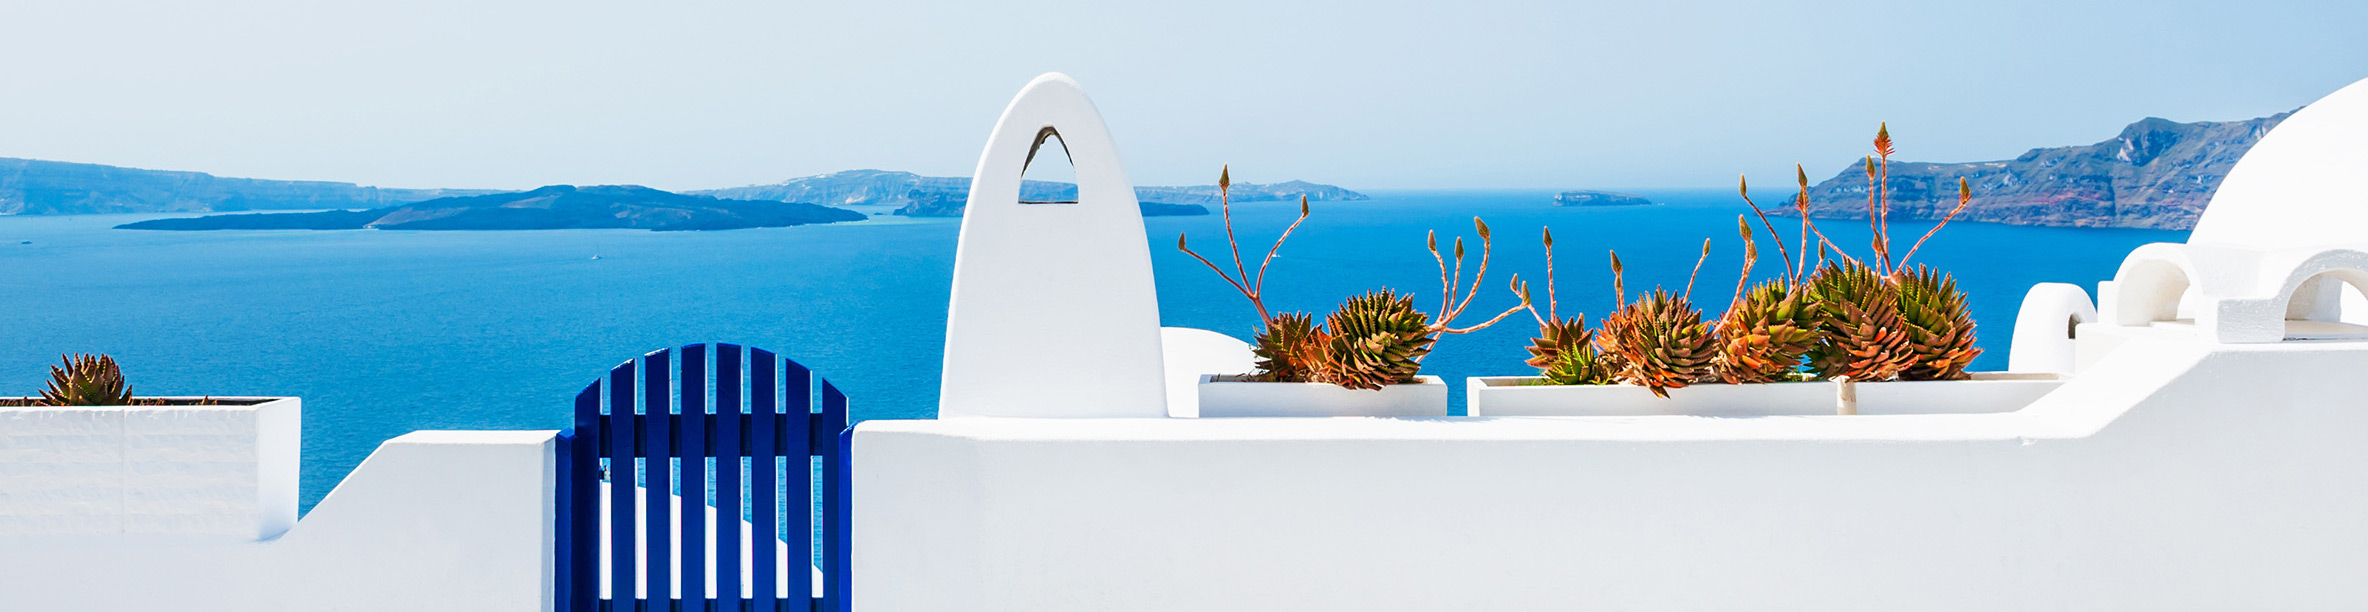 Griechenland Santorini Architektur Panorama